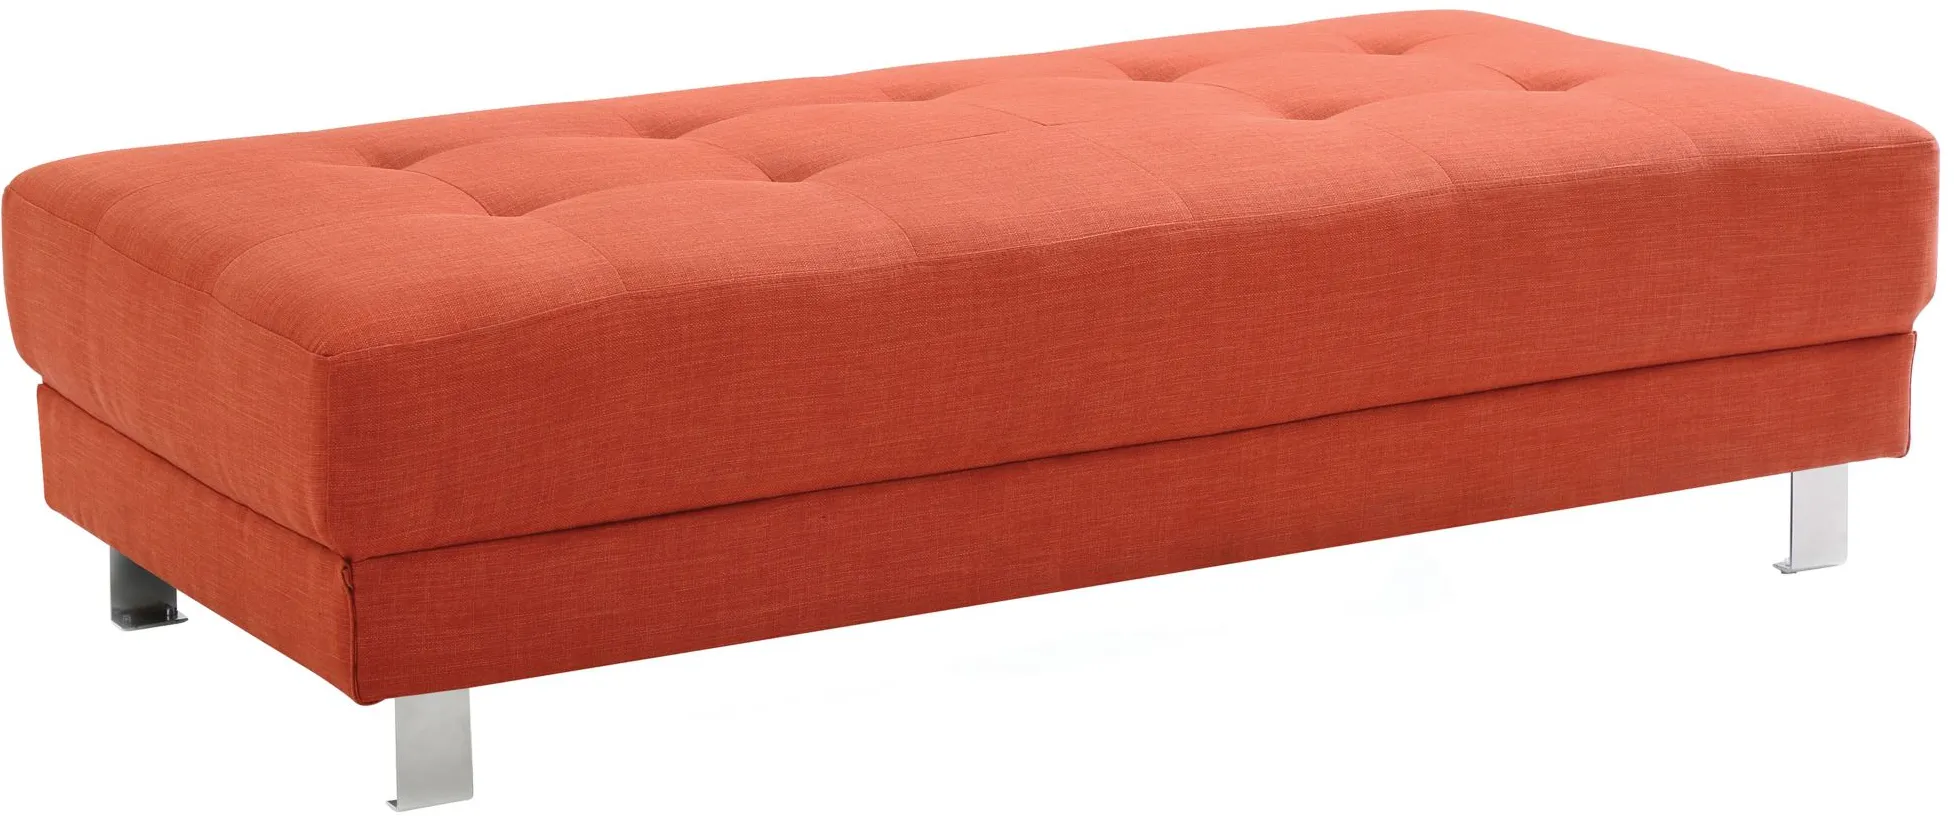 Riveredge Ottoman in Orange by Glory Furniture